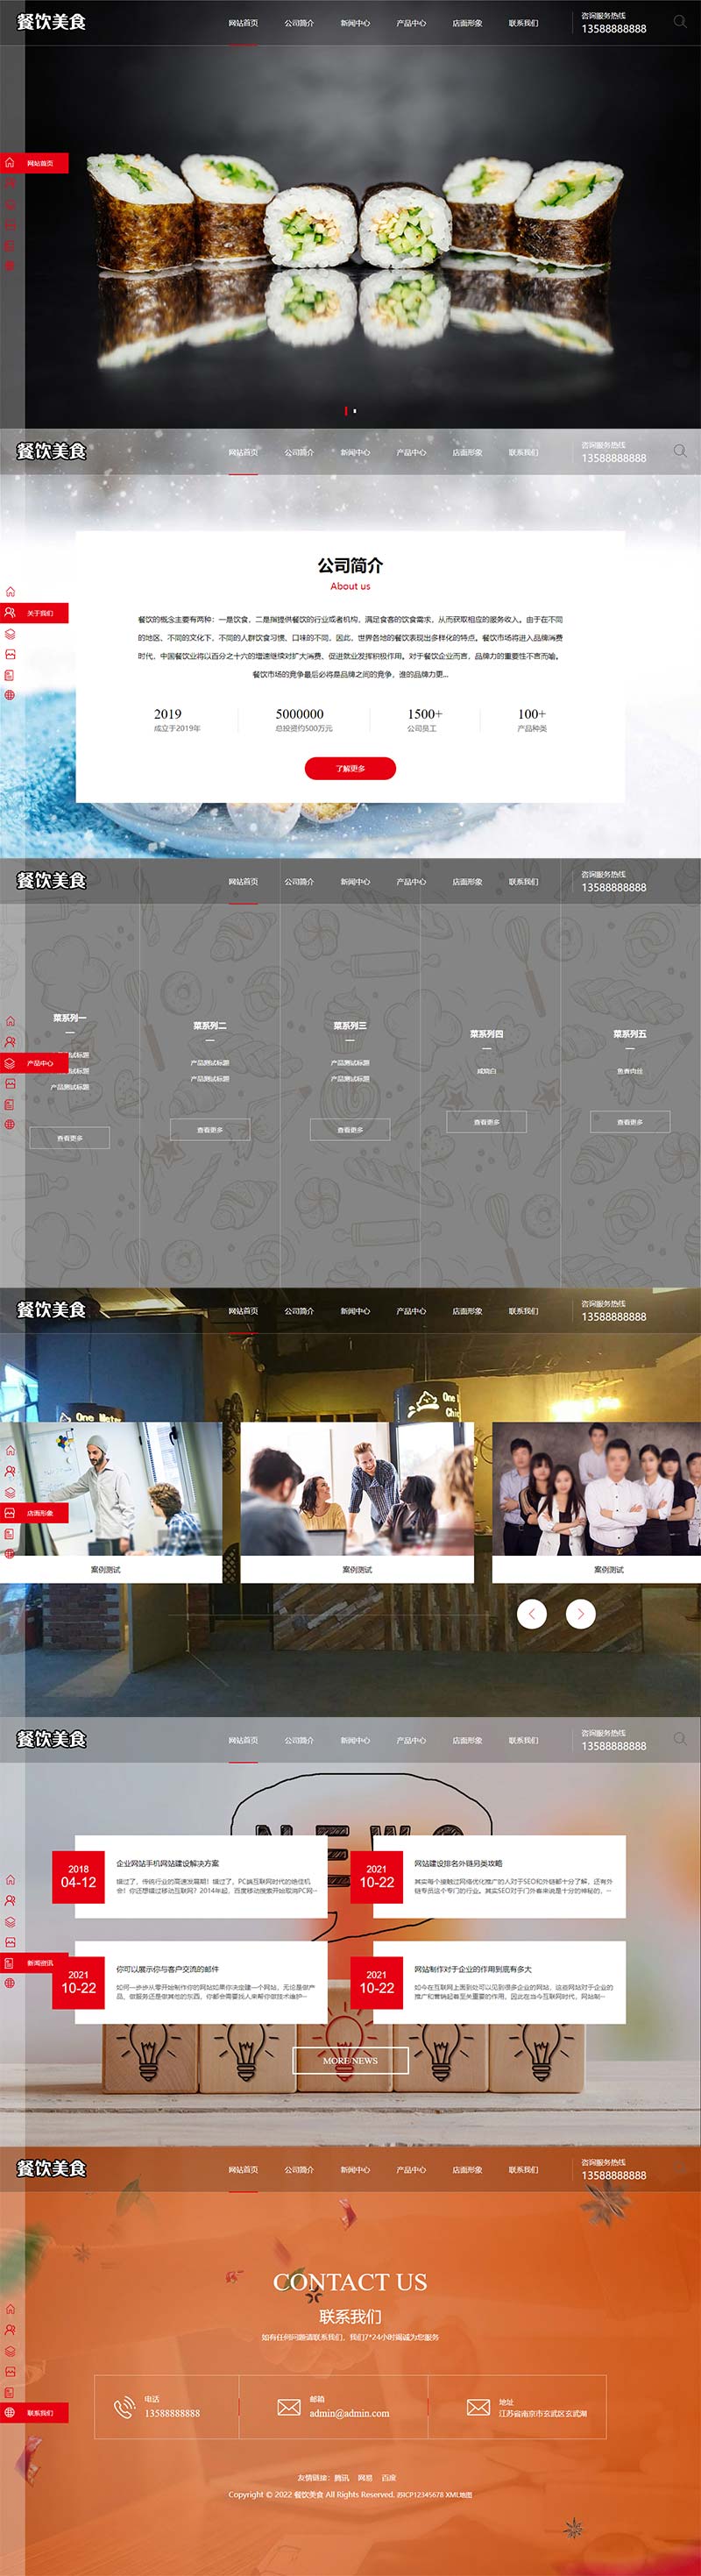 Wordpress高端餐饮美食小吃公司加盟网站模板效果图